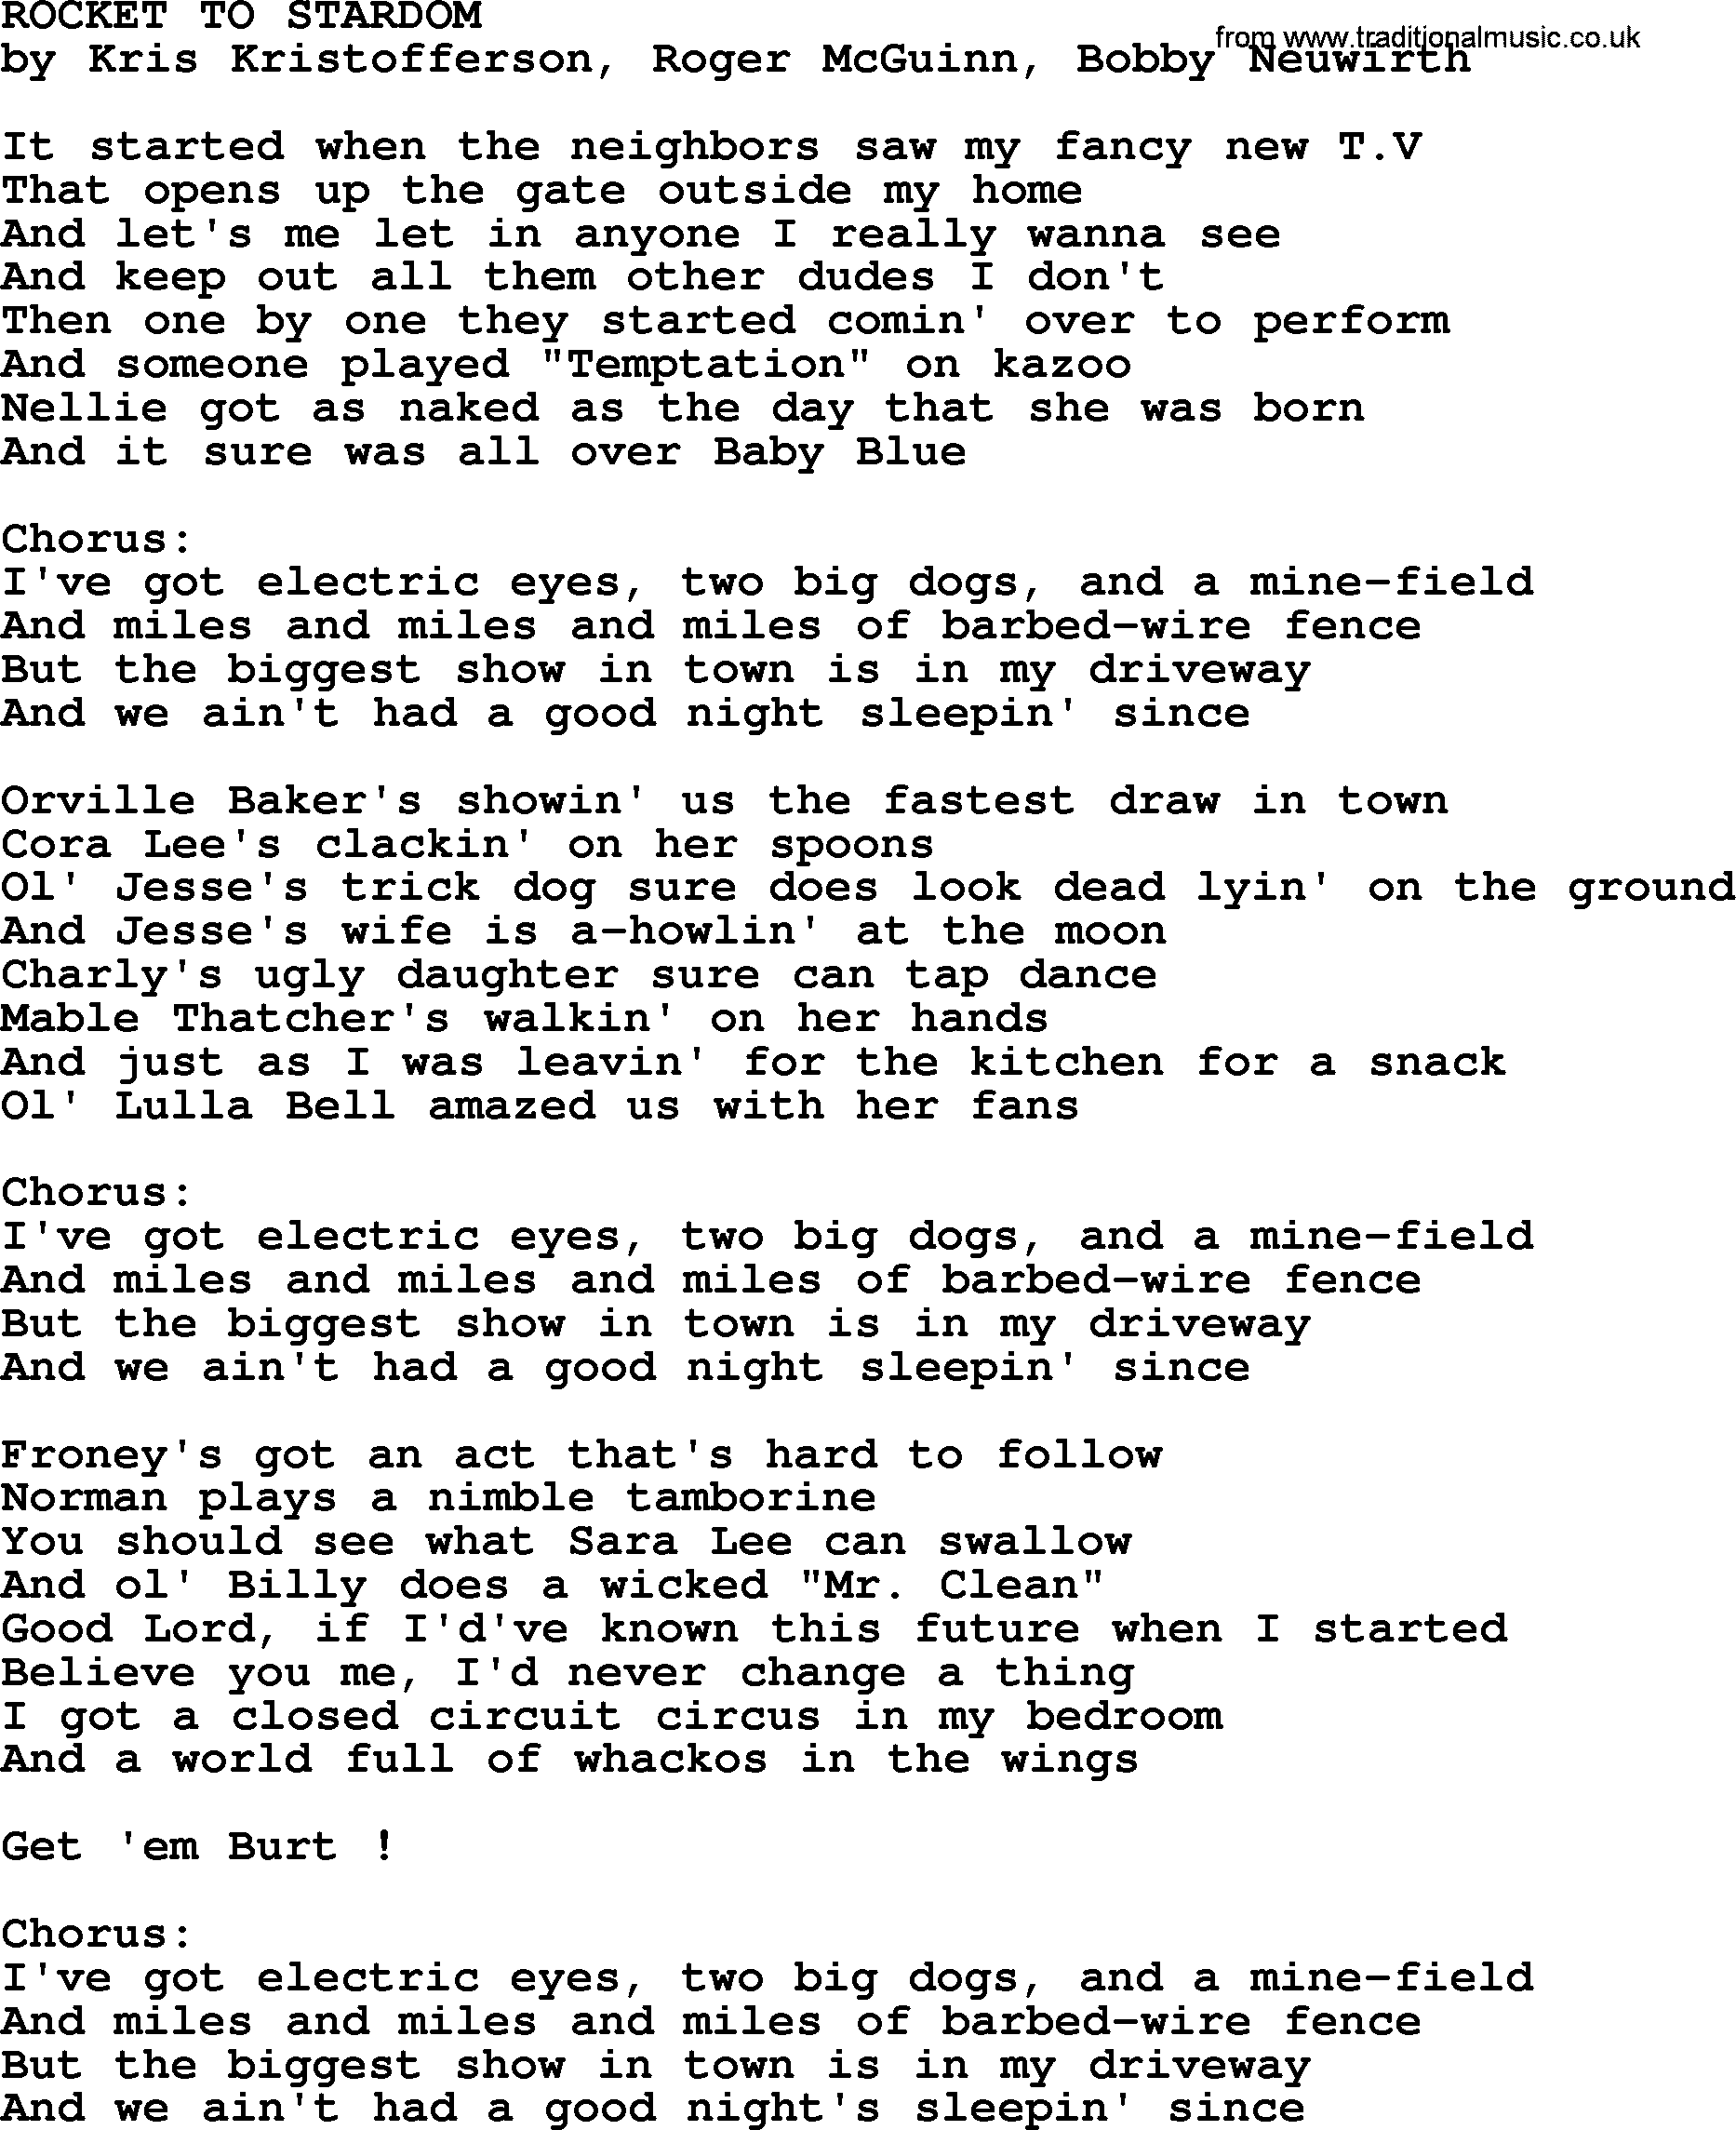 Kris Kristofferson song: Rocket To Stardom lyrics